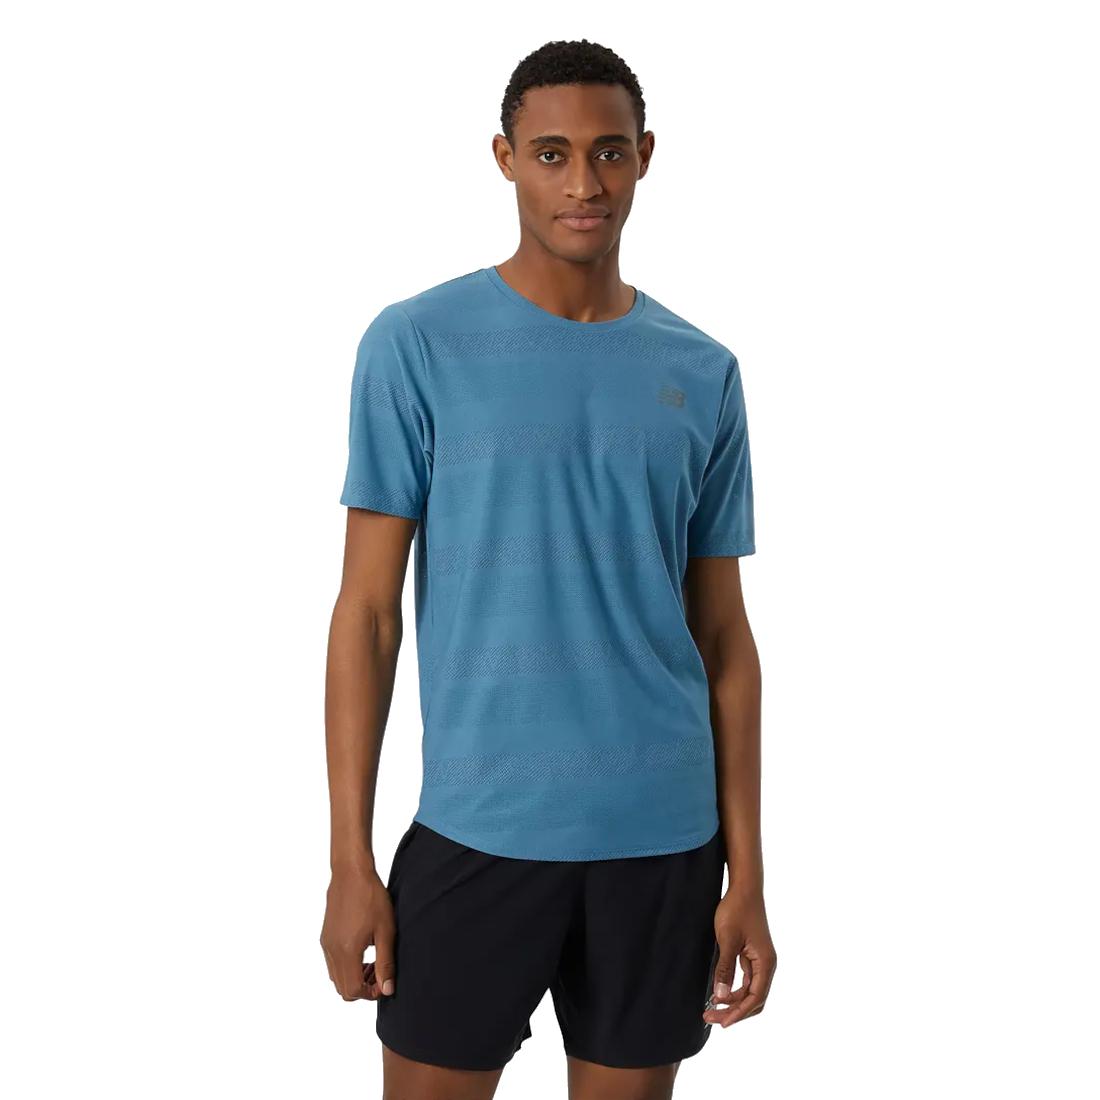 New Balance Q Speed Jacquard SS Tee, Mens blue T-shirt